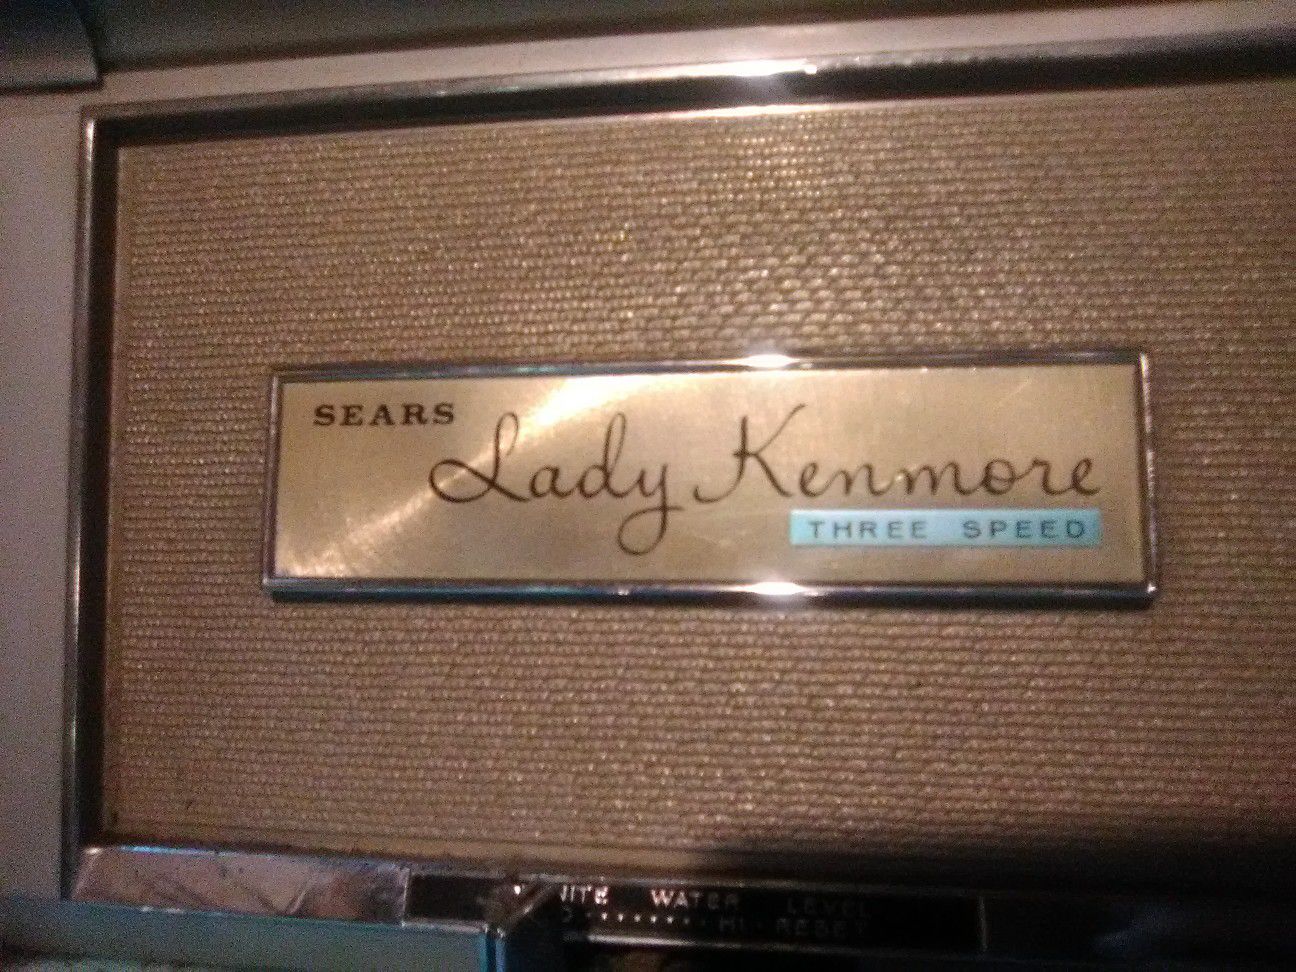 Vintage Sears "lady kenmore" washing machine